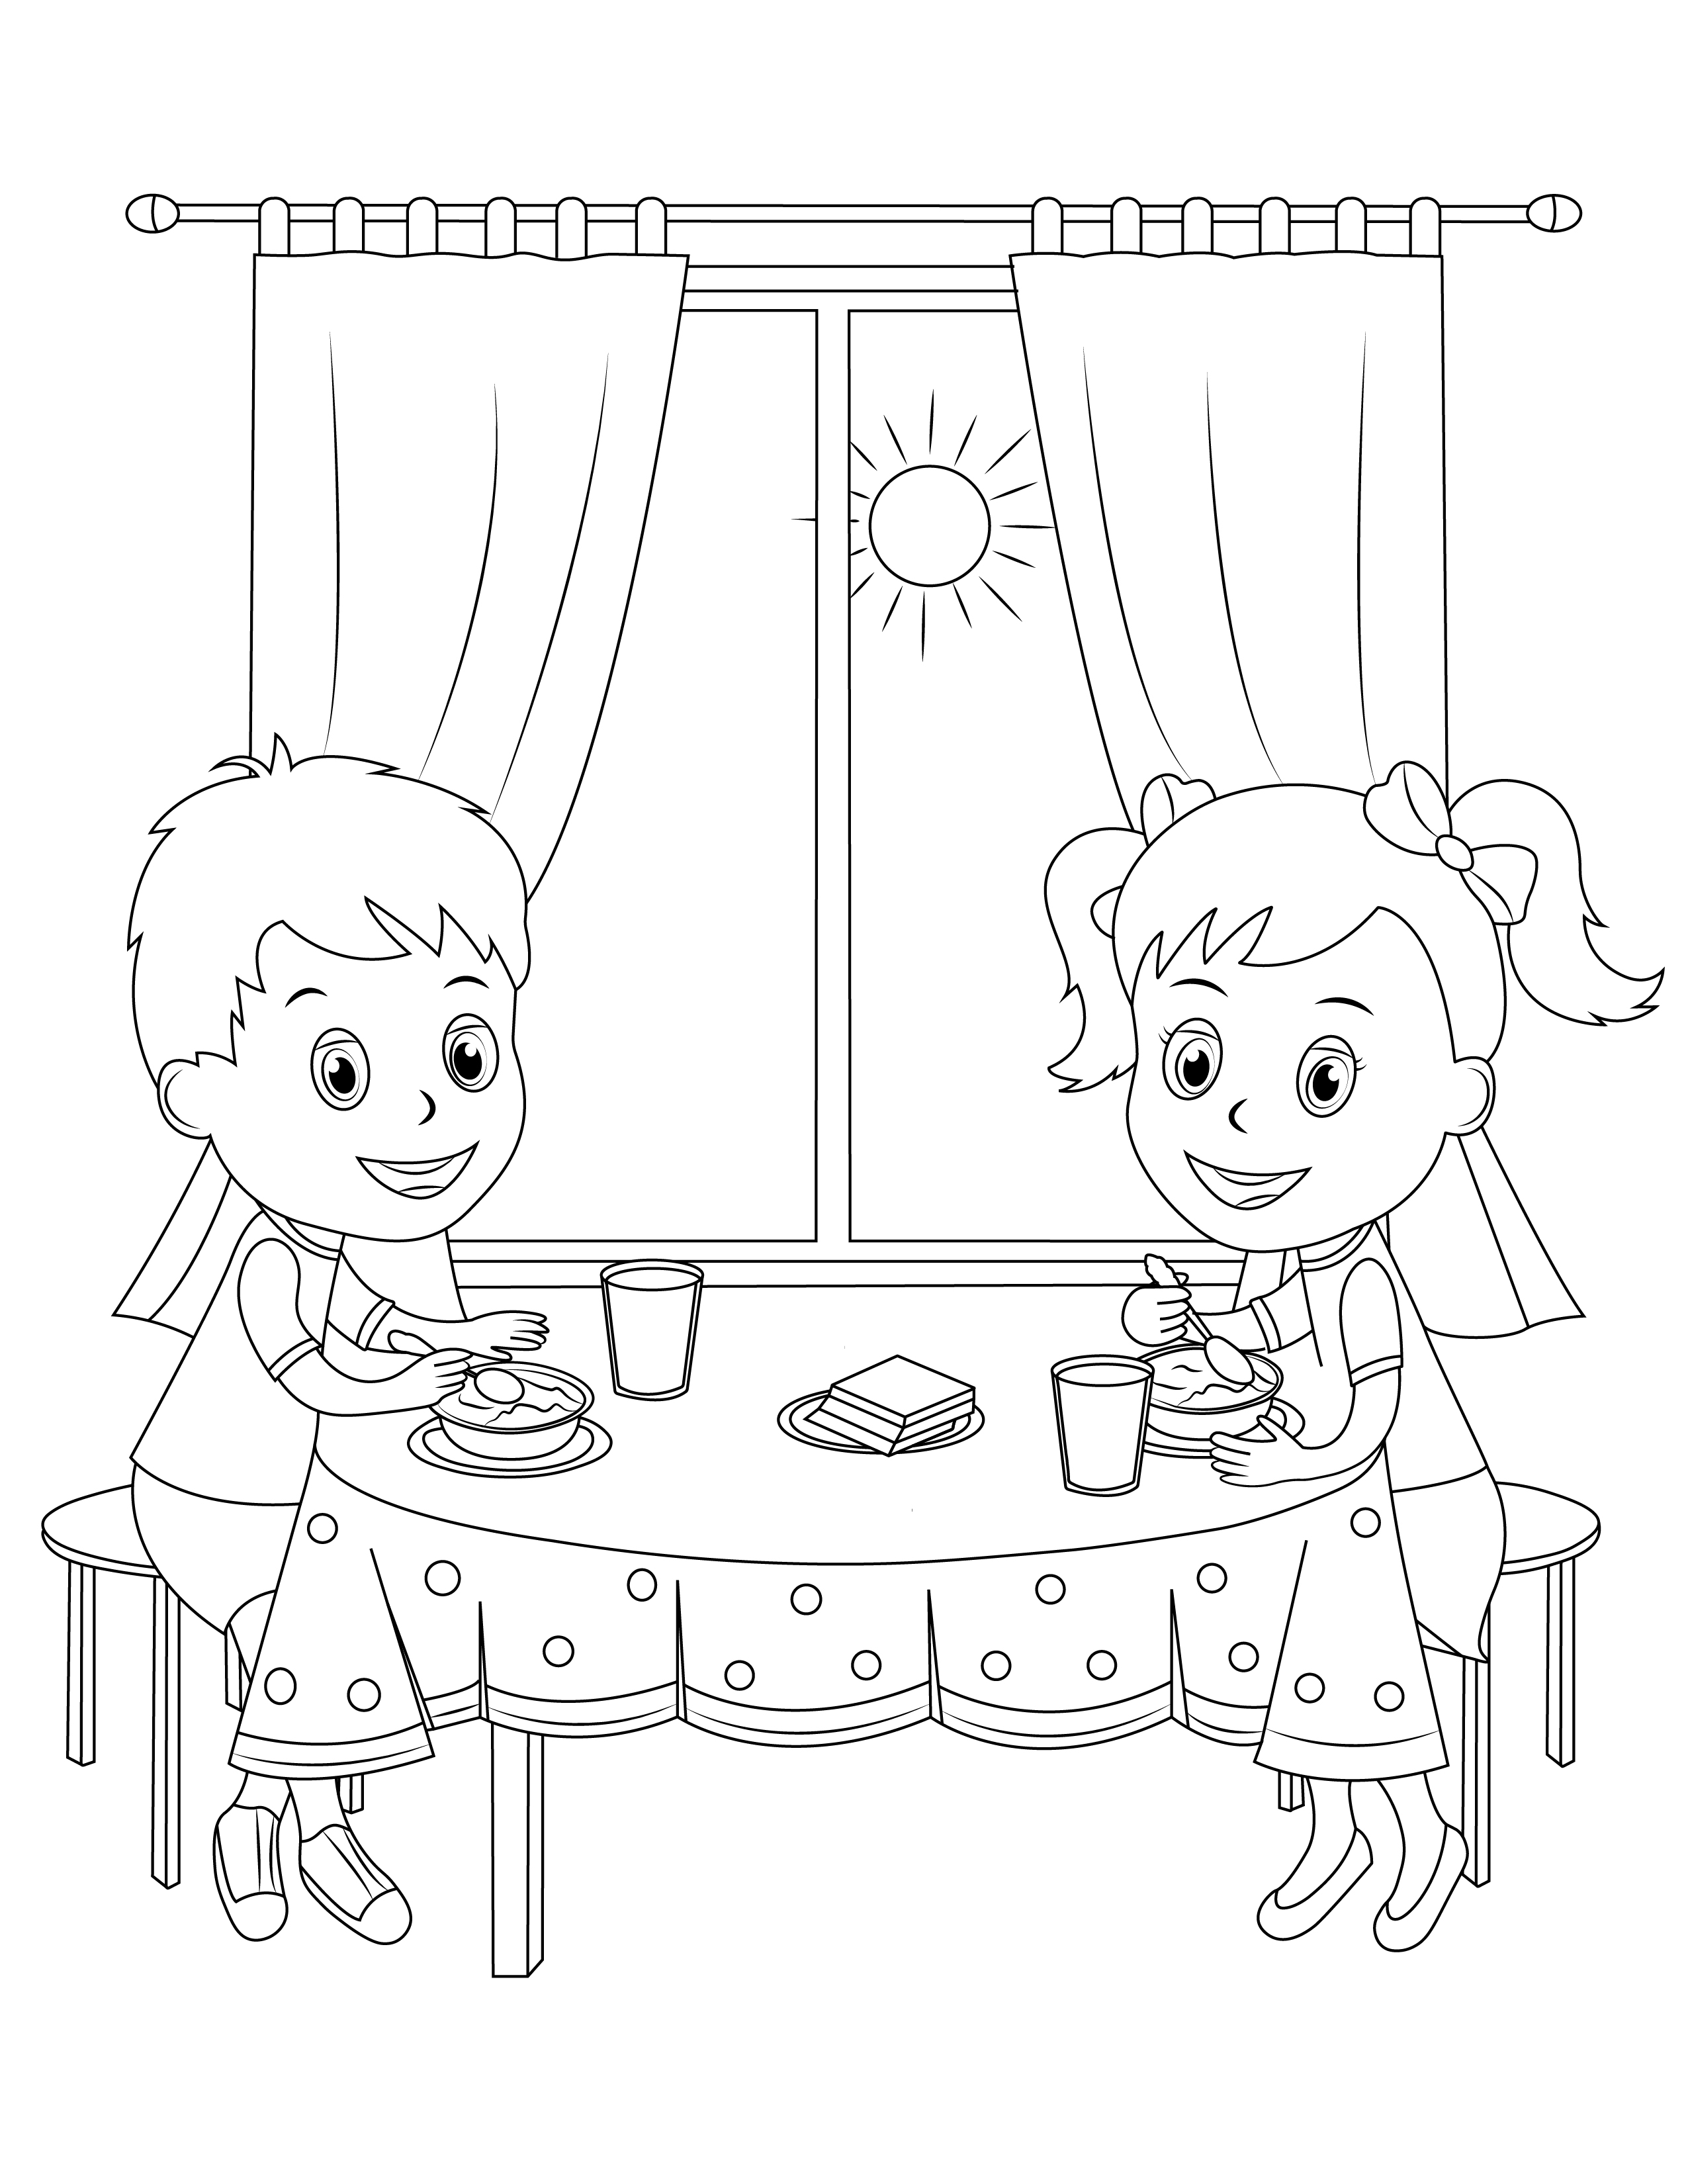 Målarbok av små flickor som spelar te